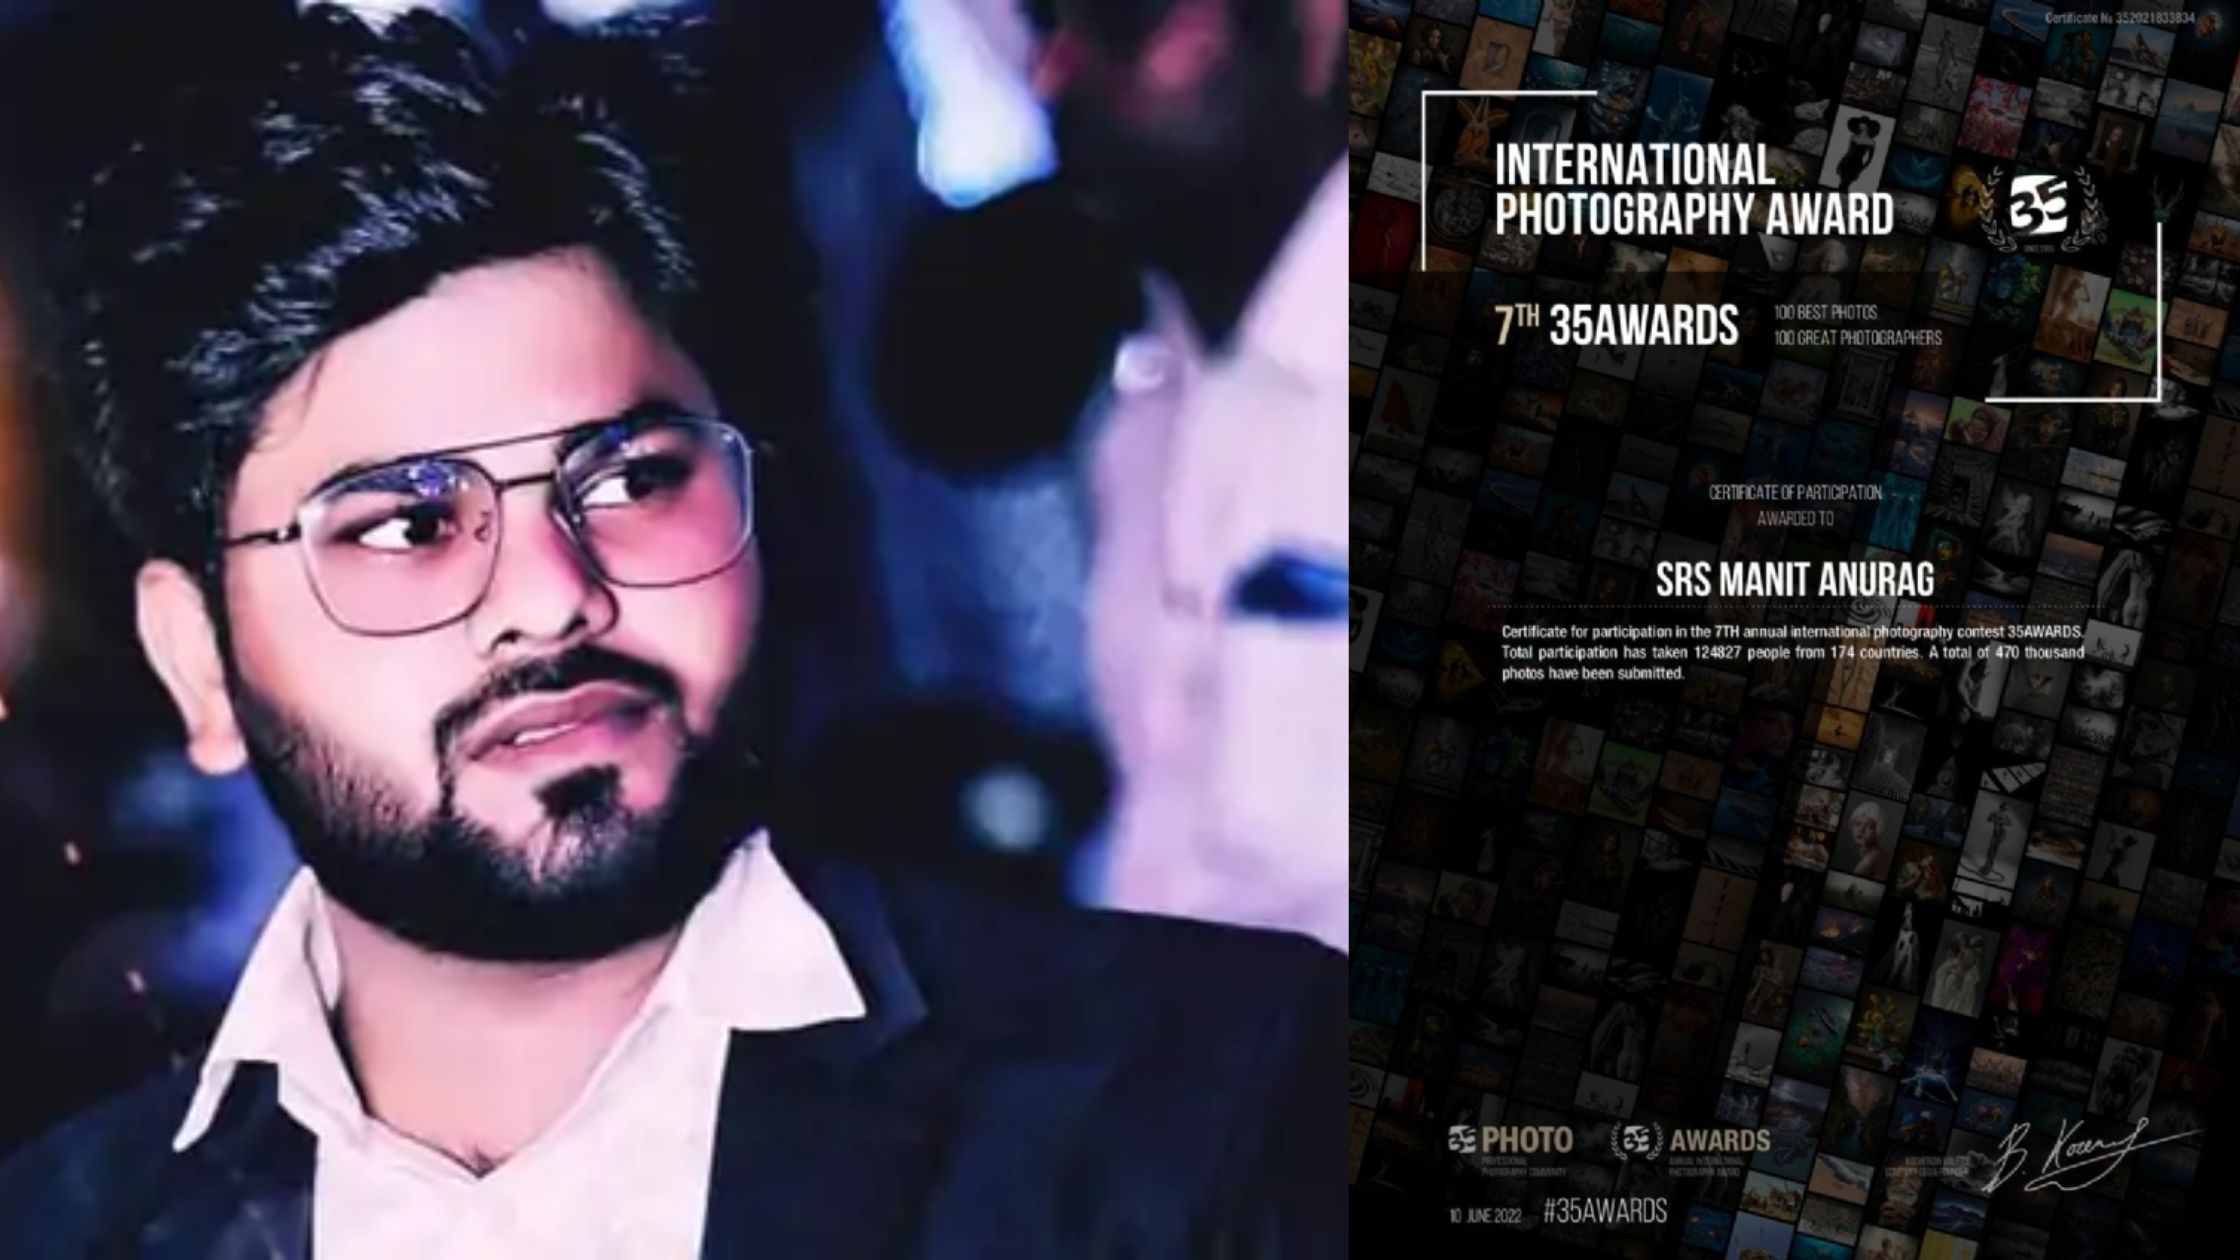 anurag got 7th 35 international photography awards